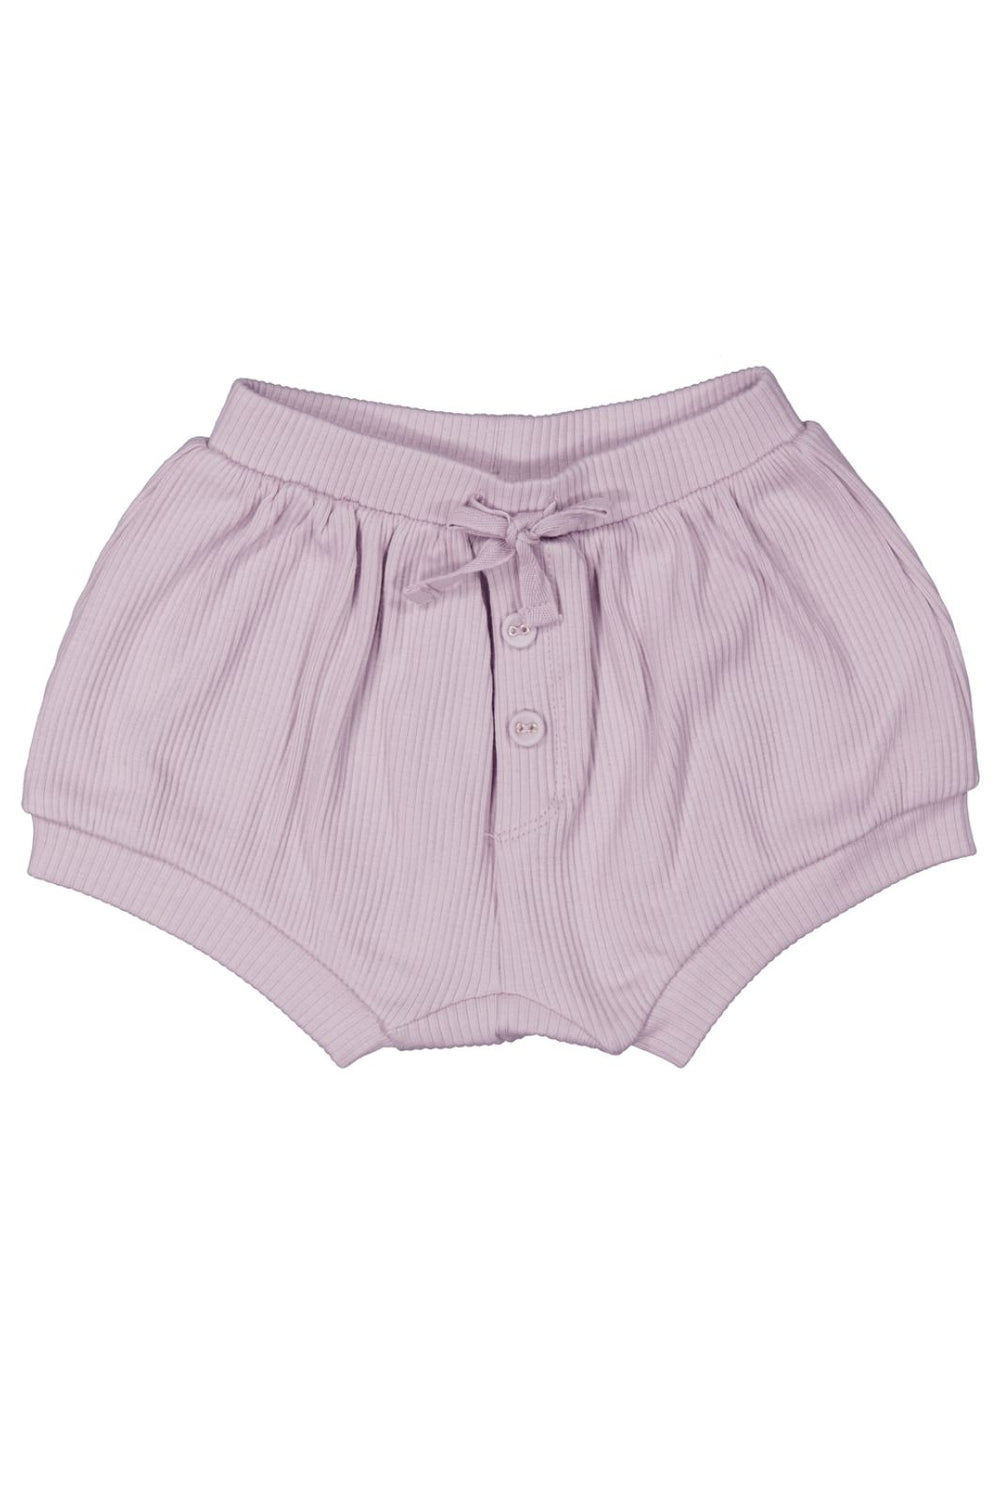 MarMar - Pom - Lilac Bloom 0437 Shorts 